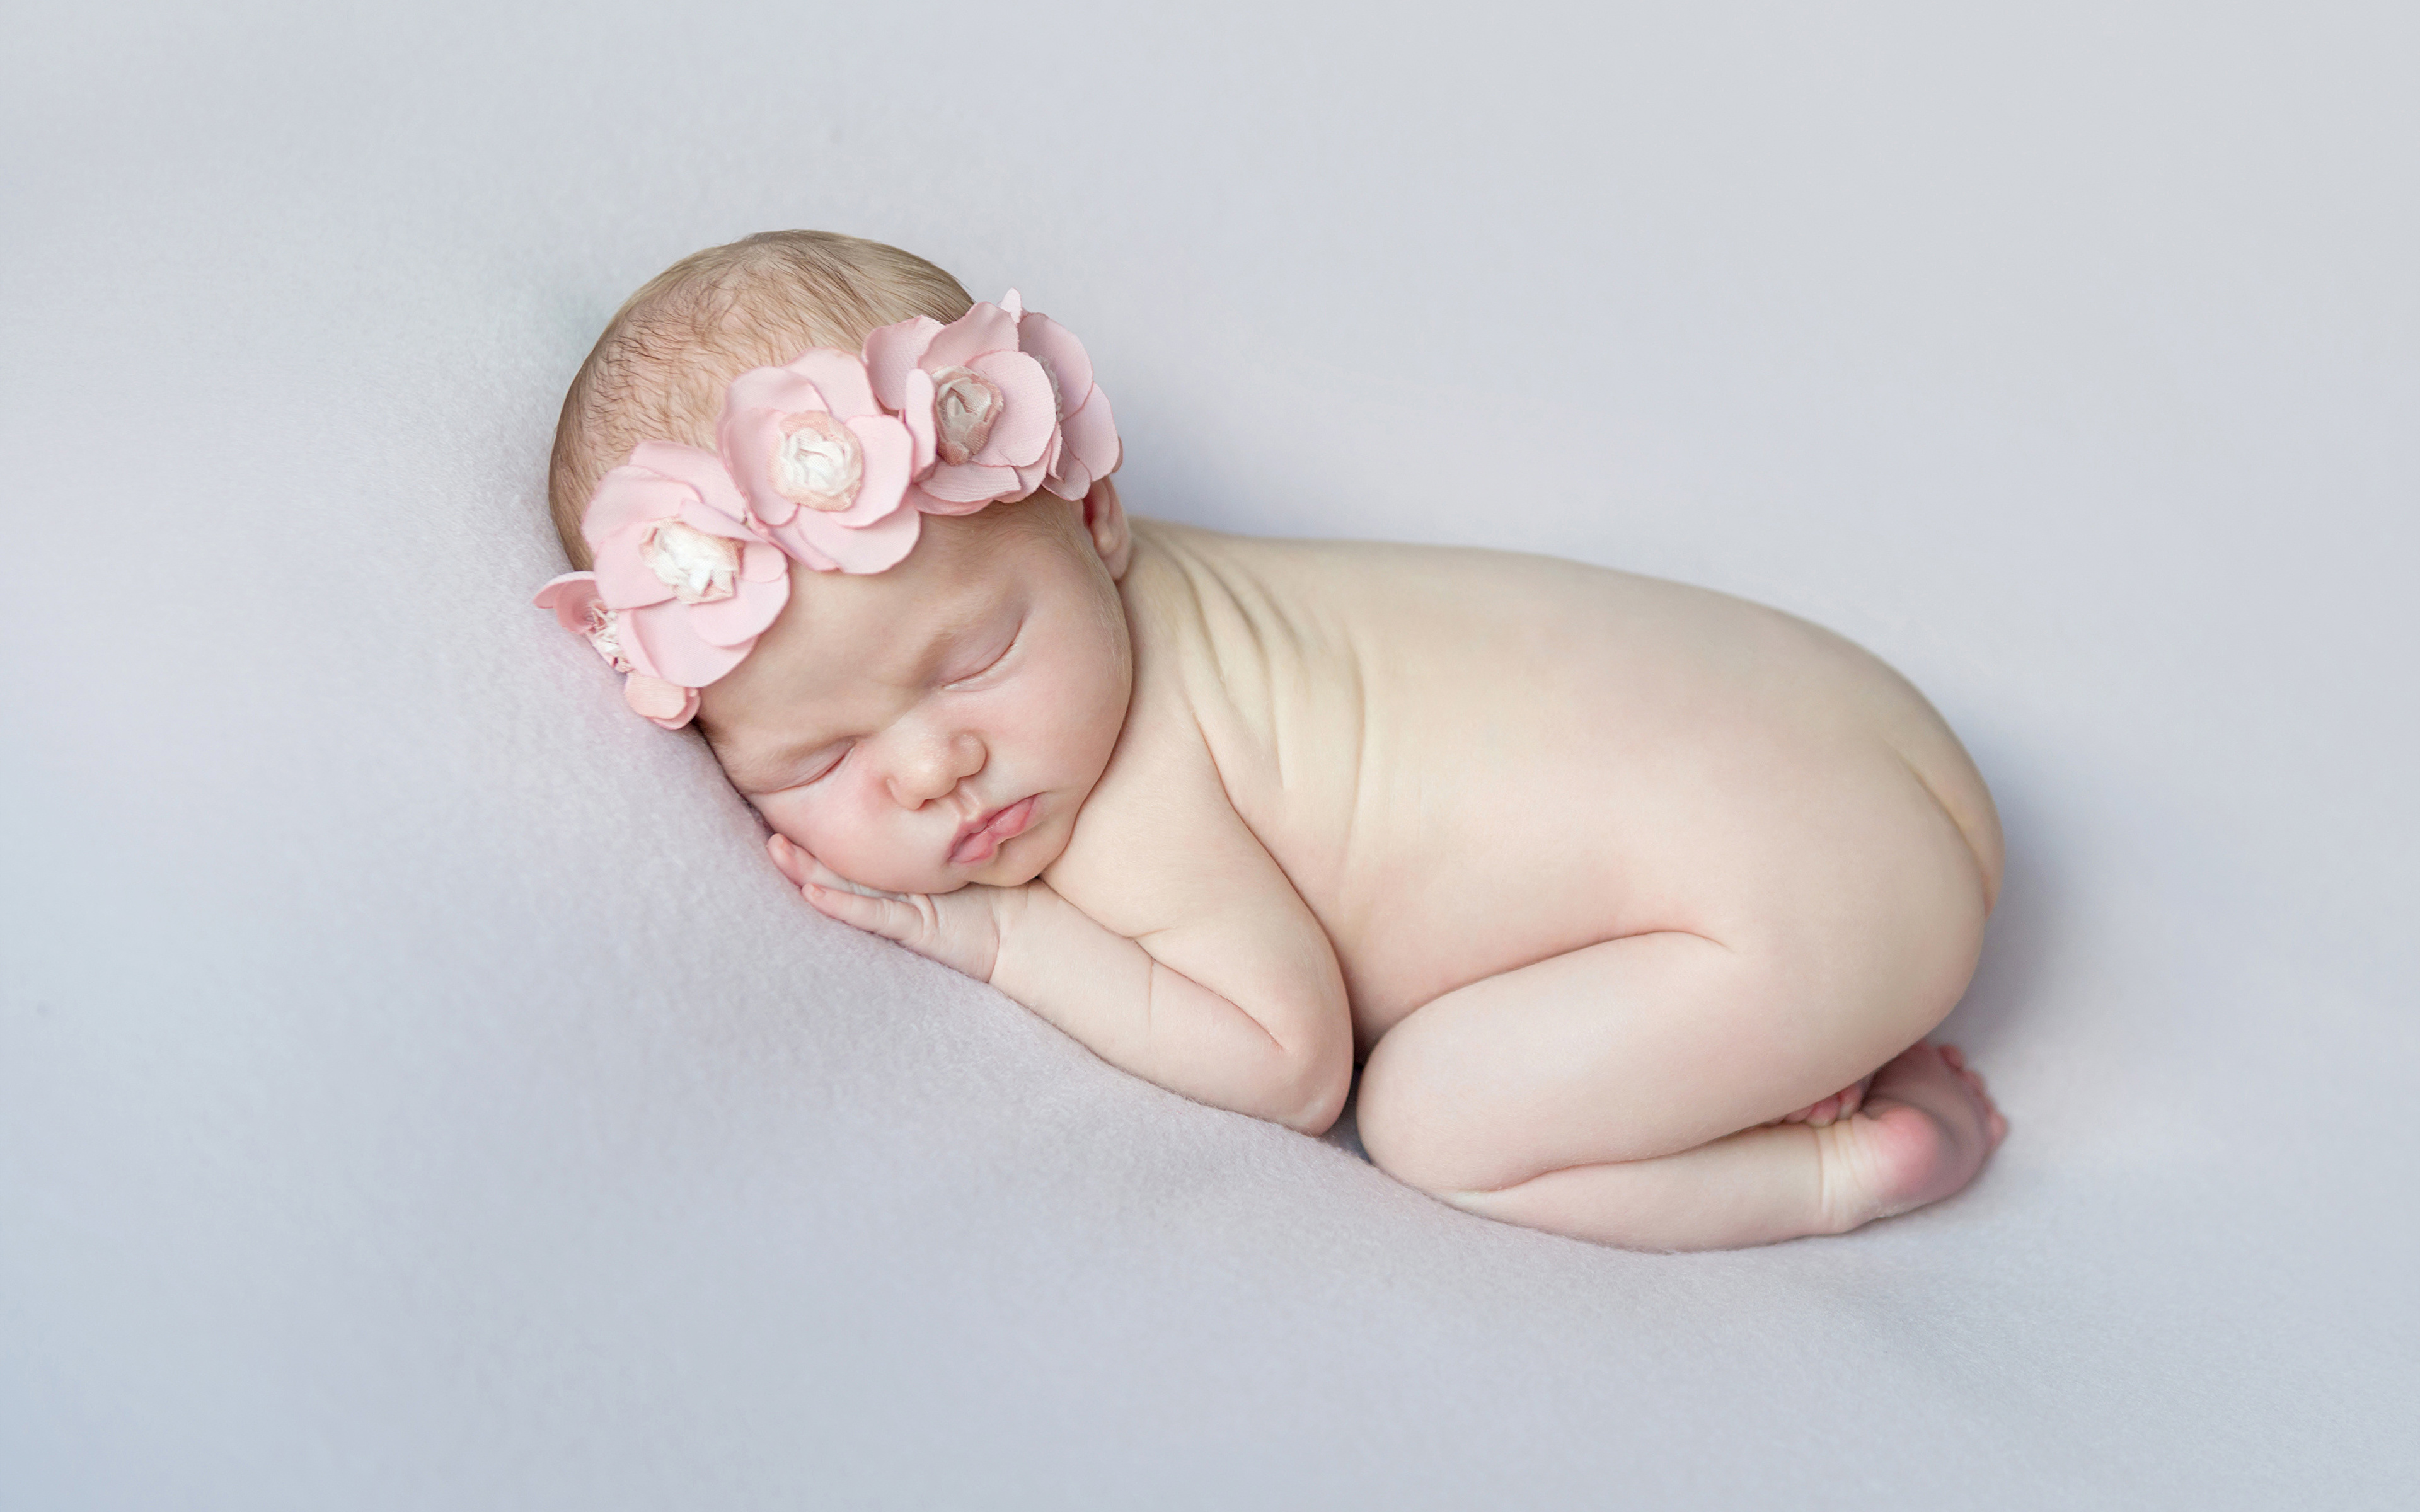 Фото Младенцы ребёнок спящий сером фоне 3840x2400 младенца младенец грудной ребёнок Дети сон Спит спят Серый фон